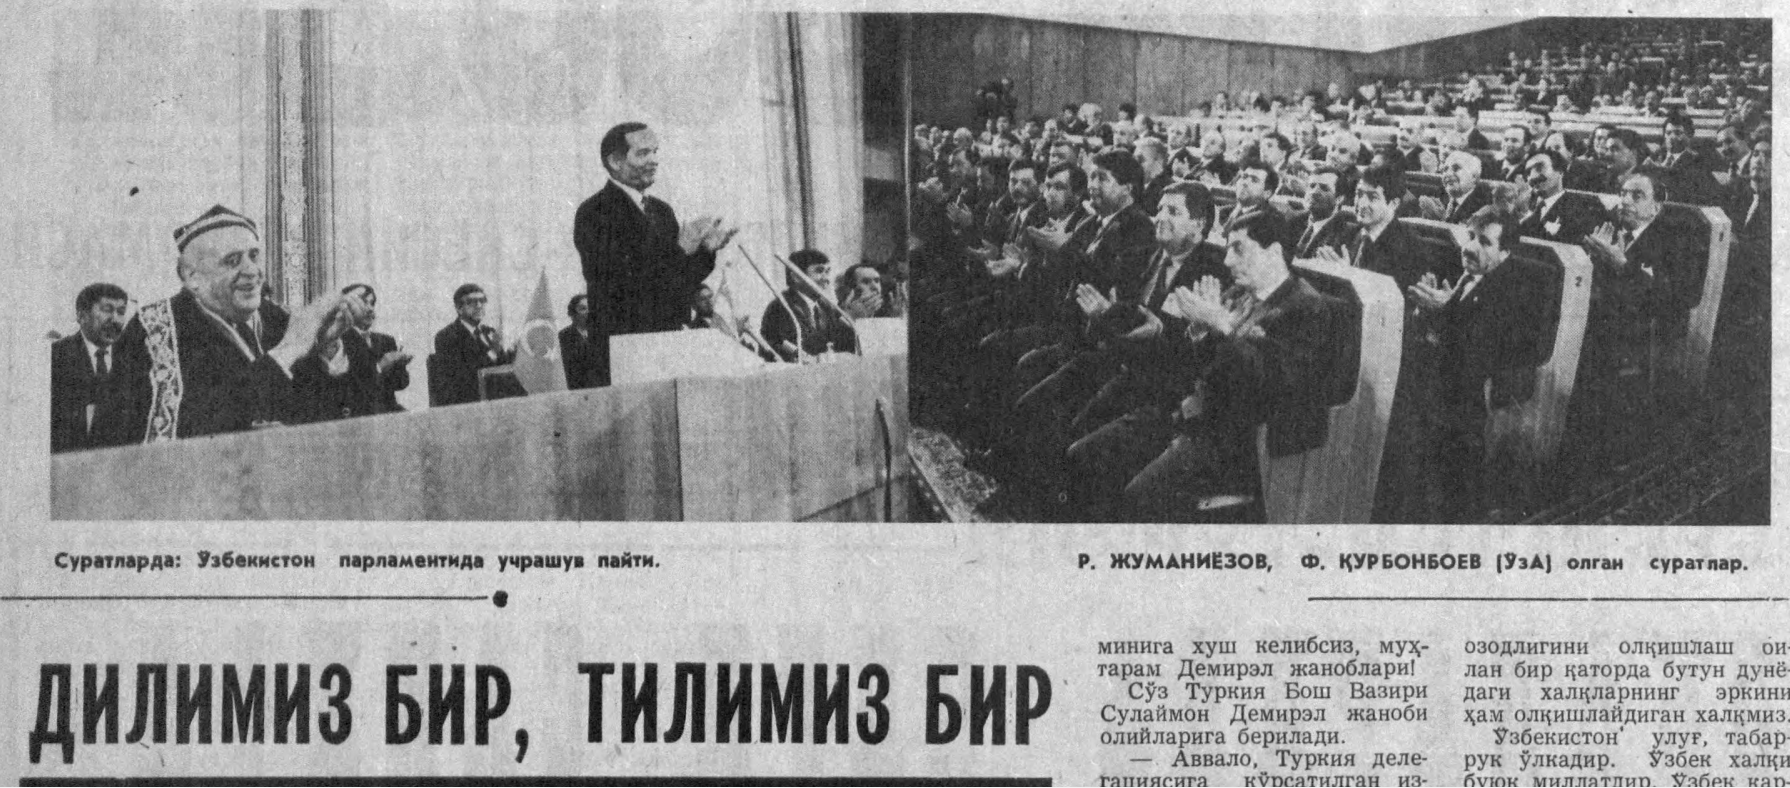 «Ўзбекистон овози» газетасининг 1992 йил 29 апрель сонидан лавҳа